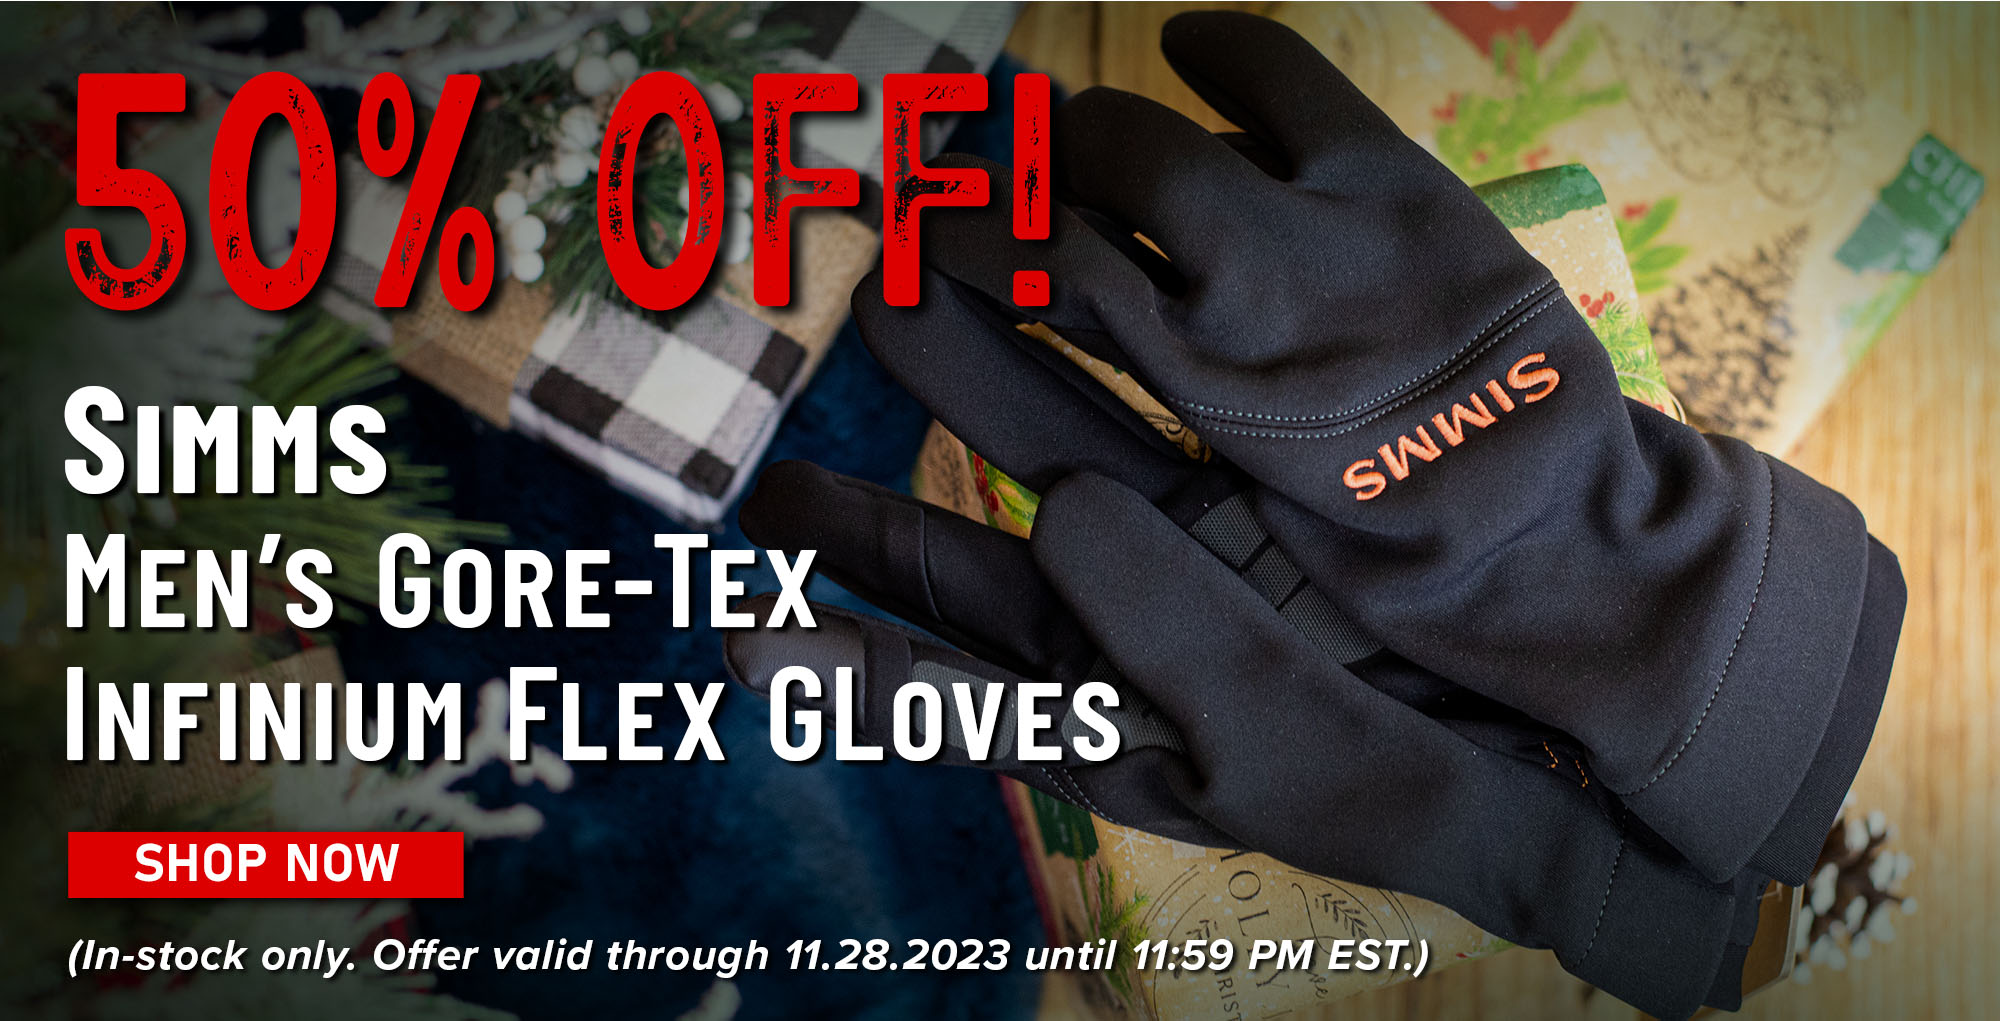 50% Off! Simms Men's Gore-Tex Infinium Flex Gloves Shop Now (In-stock only. Offer valid through 11.28.2023 until 11:59 PM EST.)